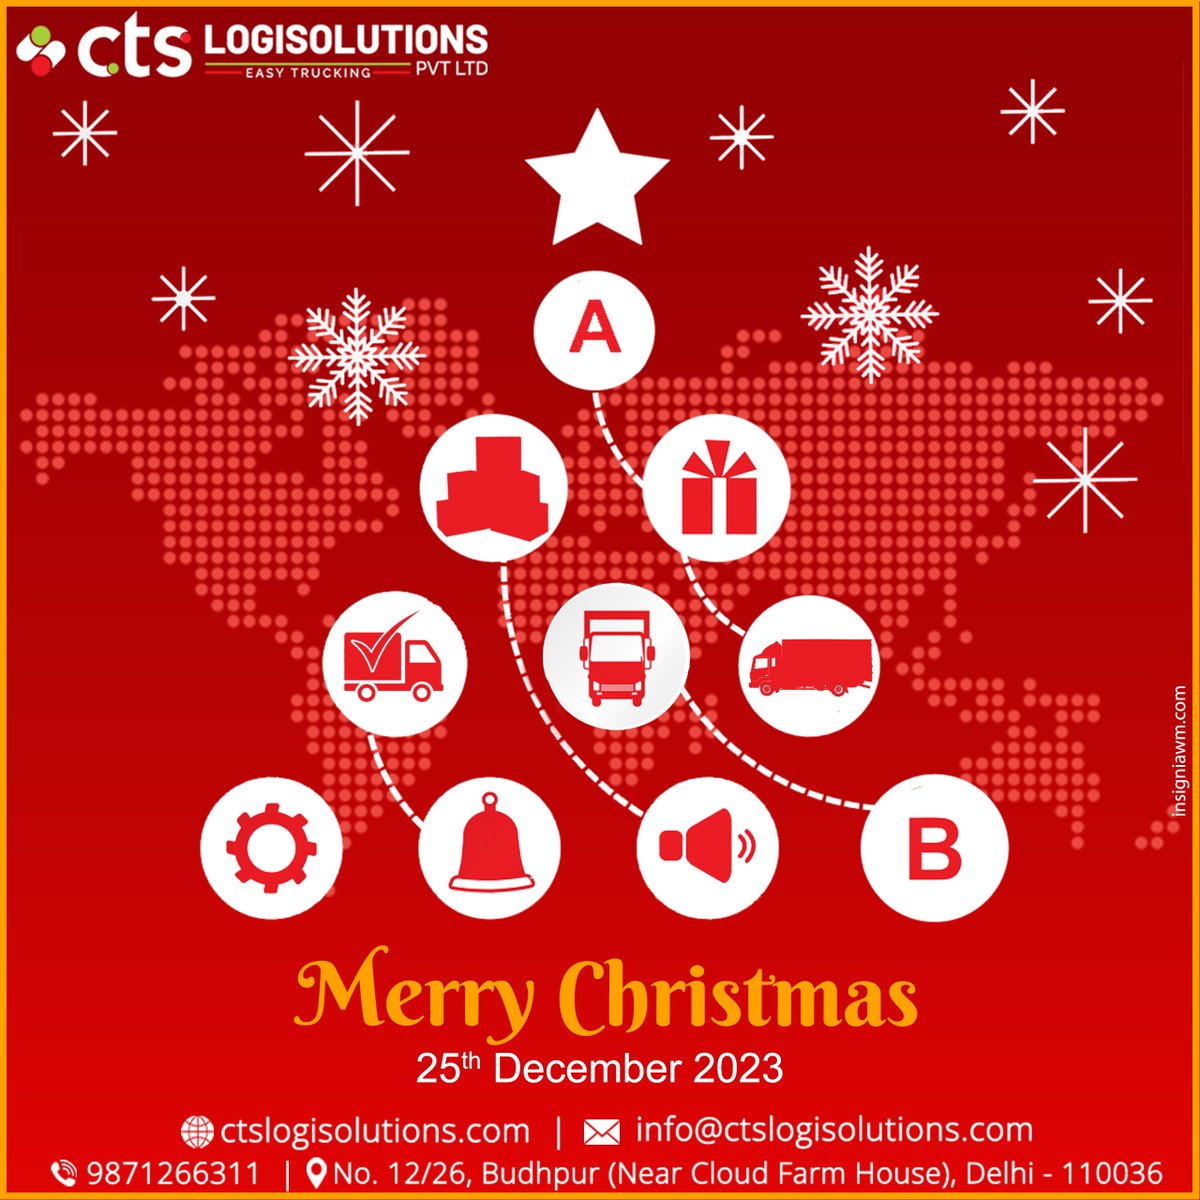 Delivering joy this Christmas and every day. Happy holidays from our CTS logistics!✨🎄

#christmaspresents #happyholidays #winter #santaclaus #christmasmood #christmasvibes #merrychristmas #xmas2023 #christmastree #jinglebells #secretsanta #logisticsindia #logistics #delhi #cts